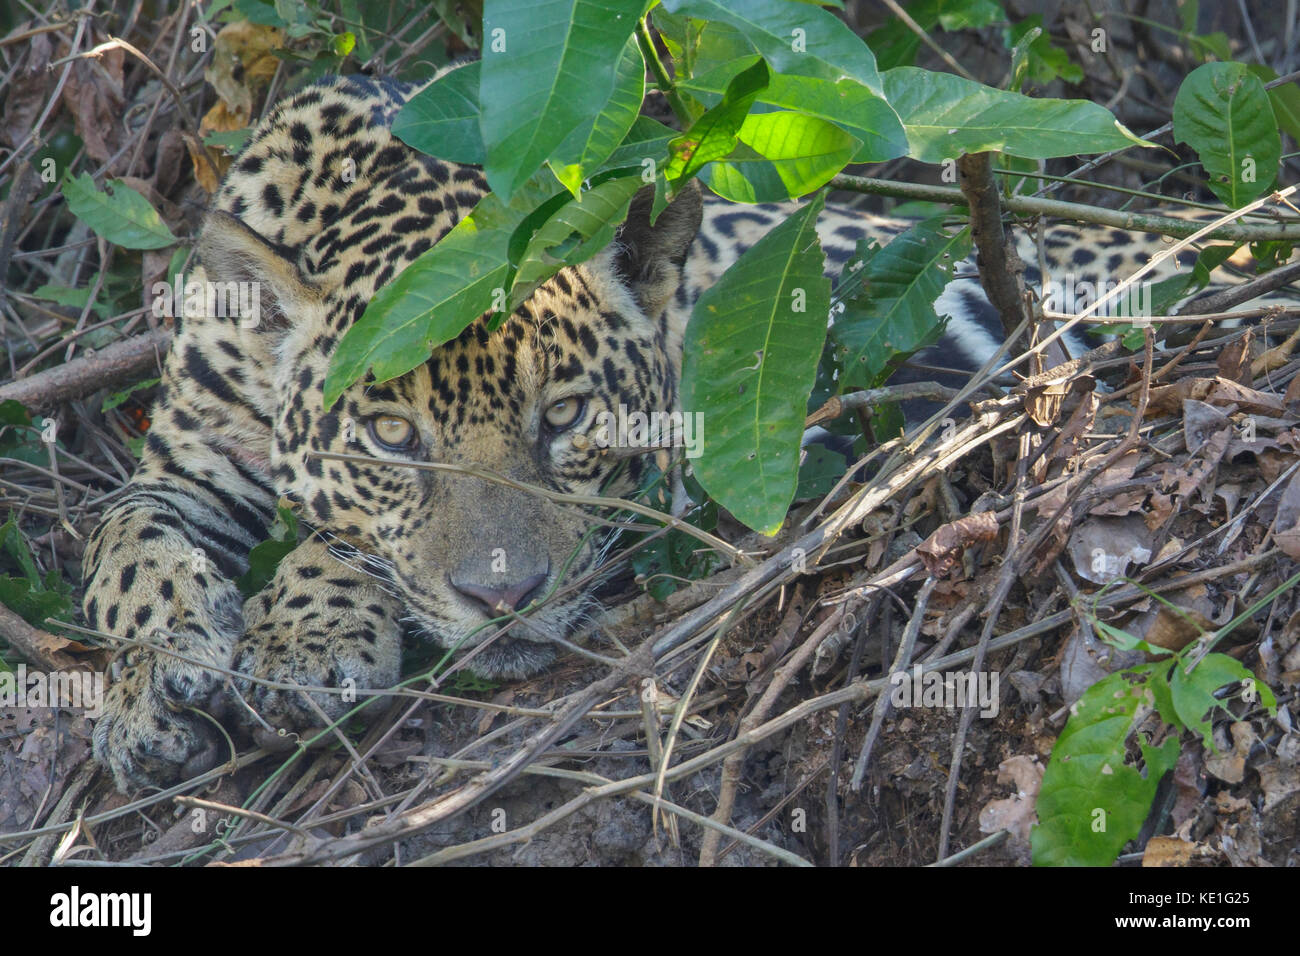 Jaguar in the Pantanal region of Brazil Stock Photo